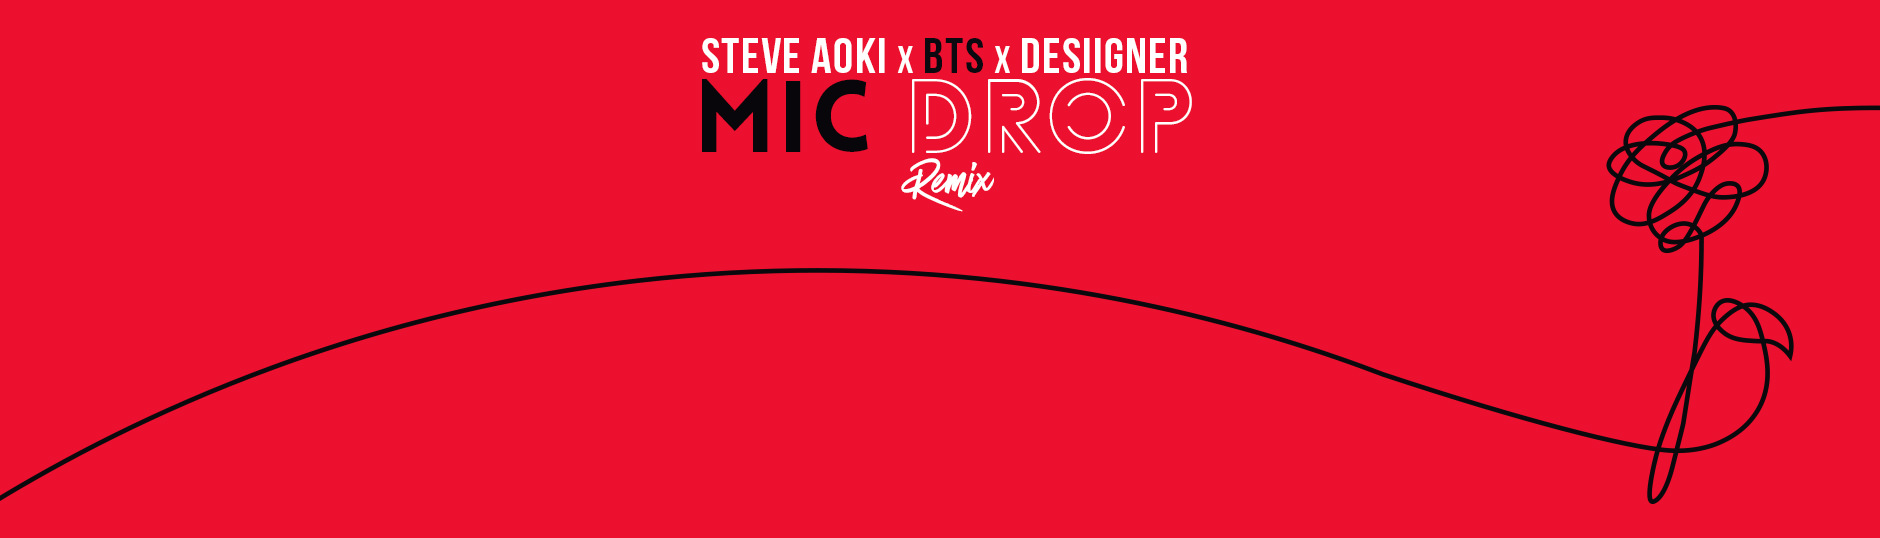 Bts Mic Drop Remix Ft Steve Aoki Desiigner Wallpaper